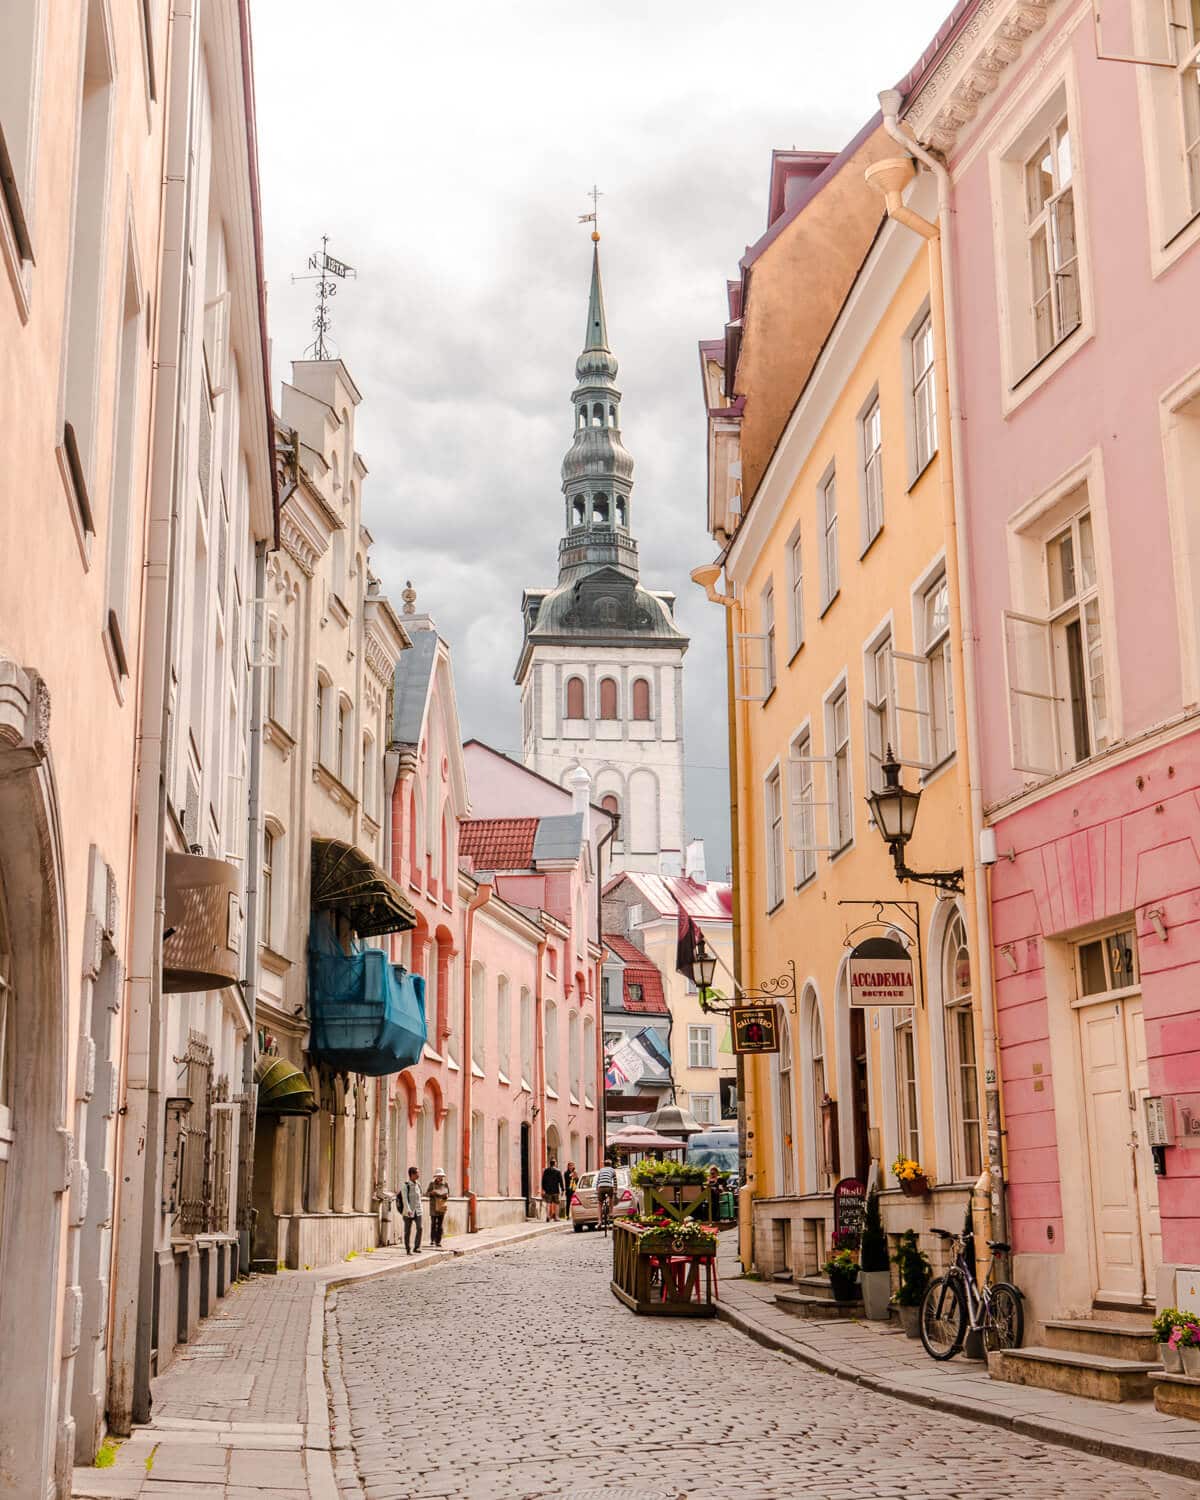 How to do a Day trip to Tallinn, Estonia from Helsinki